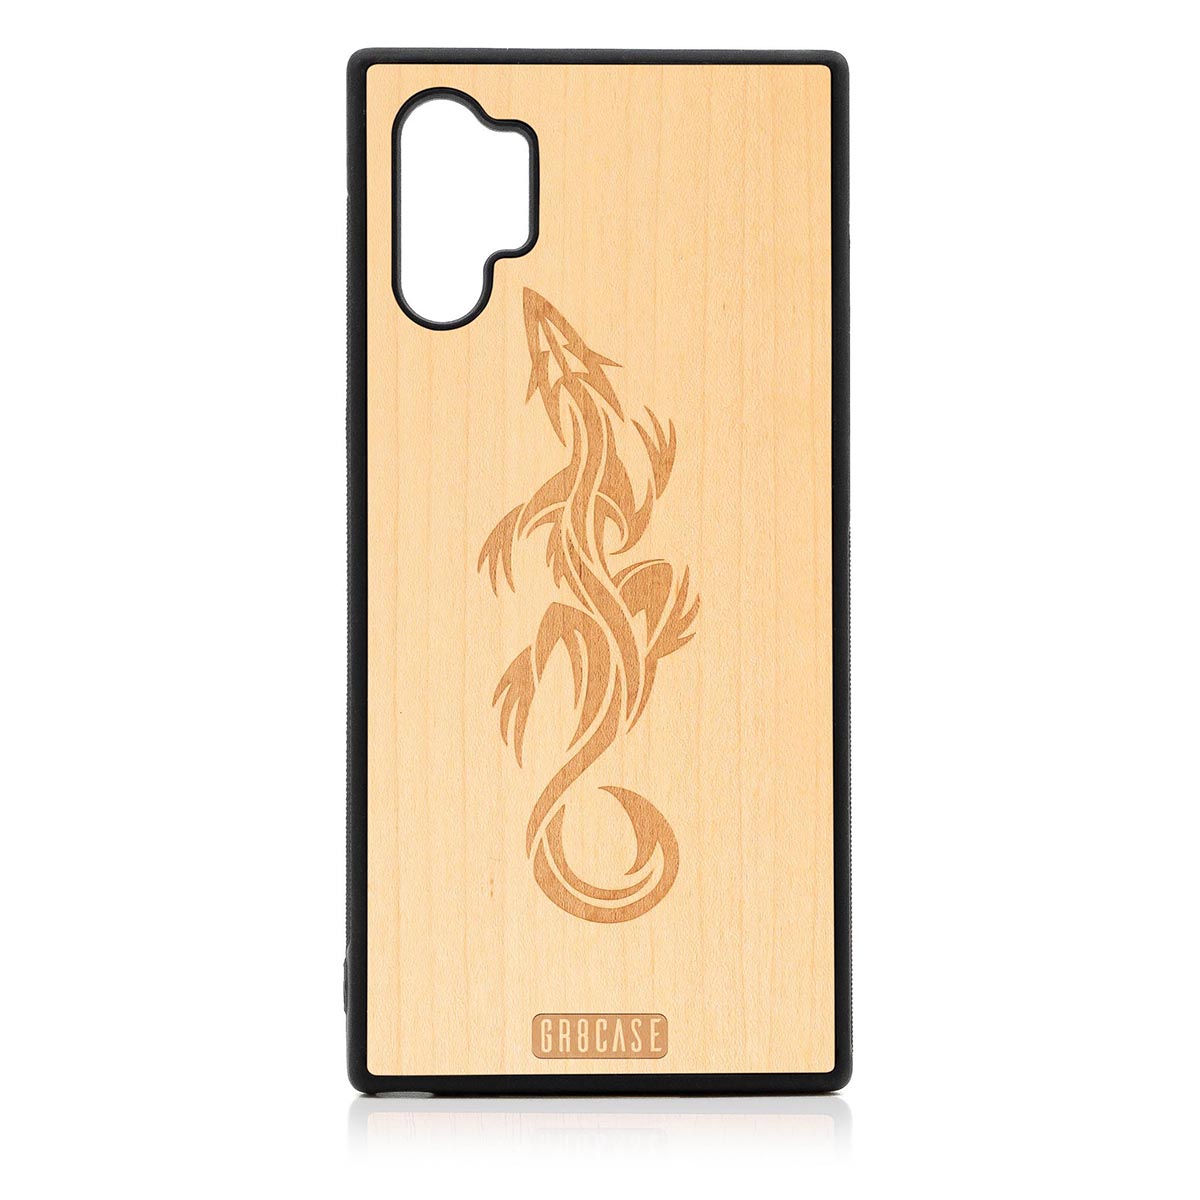 Lizard Design Wood Case Samsung Galaxy Note 10 Plus by GR8CASE